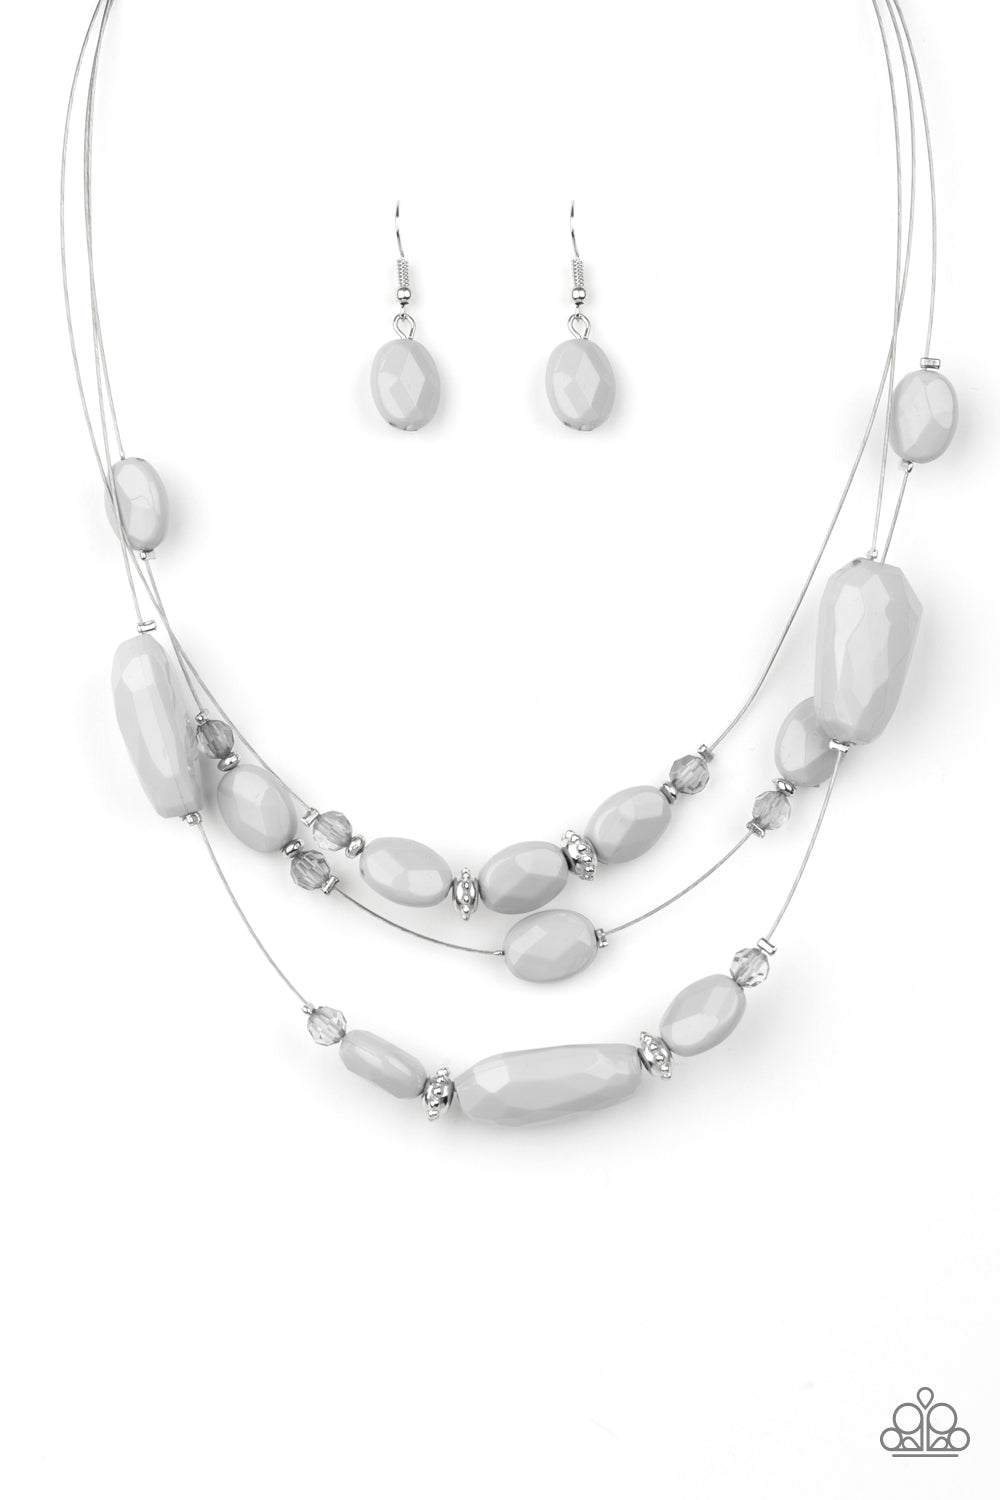 Radiant Reflections - silver - Paparazzi necklace – JewelryBlingThing